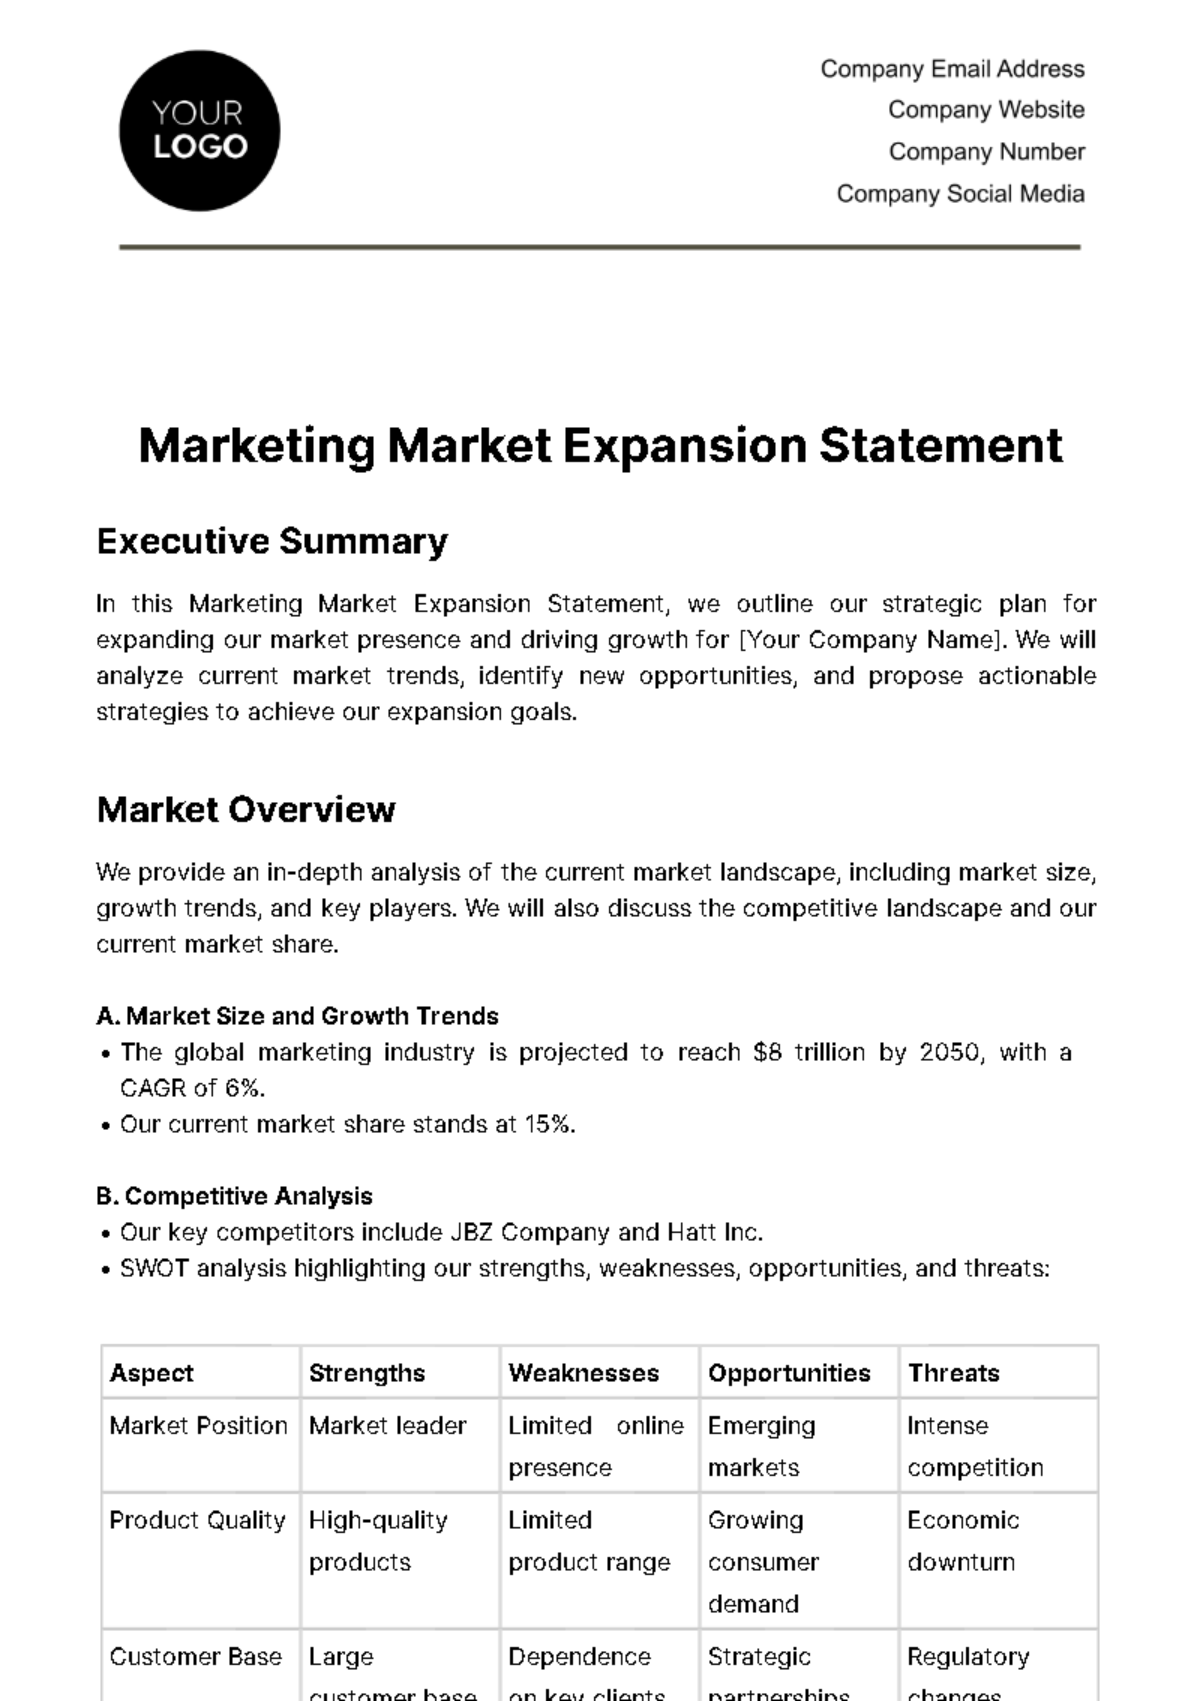 Marketing Market Expansion Statement Template